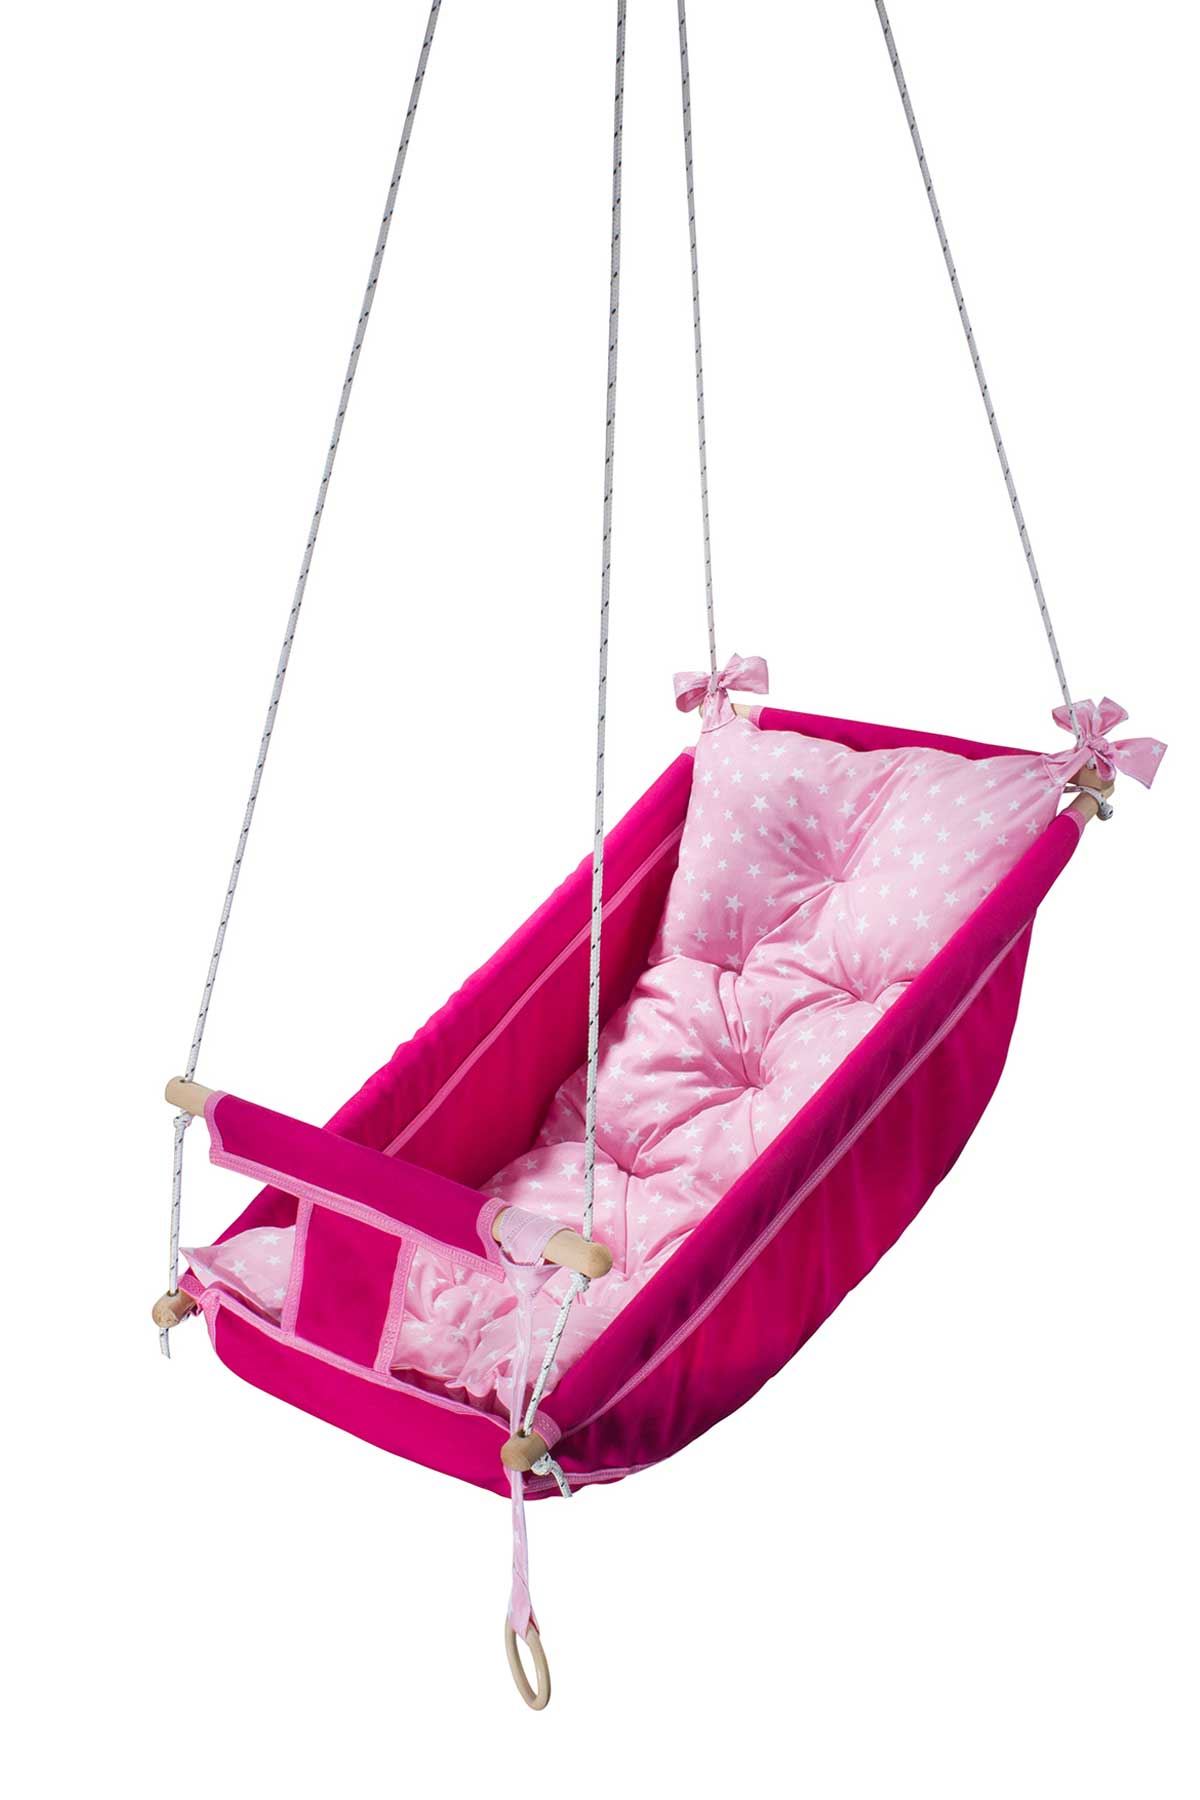 Pink Bundera Kids Baby Sleeping Swing Wooden Hammock Cradle Swing